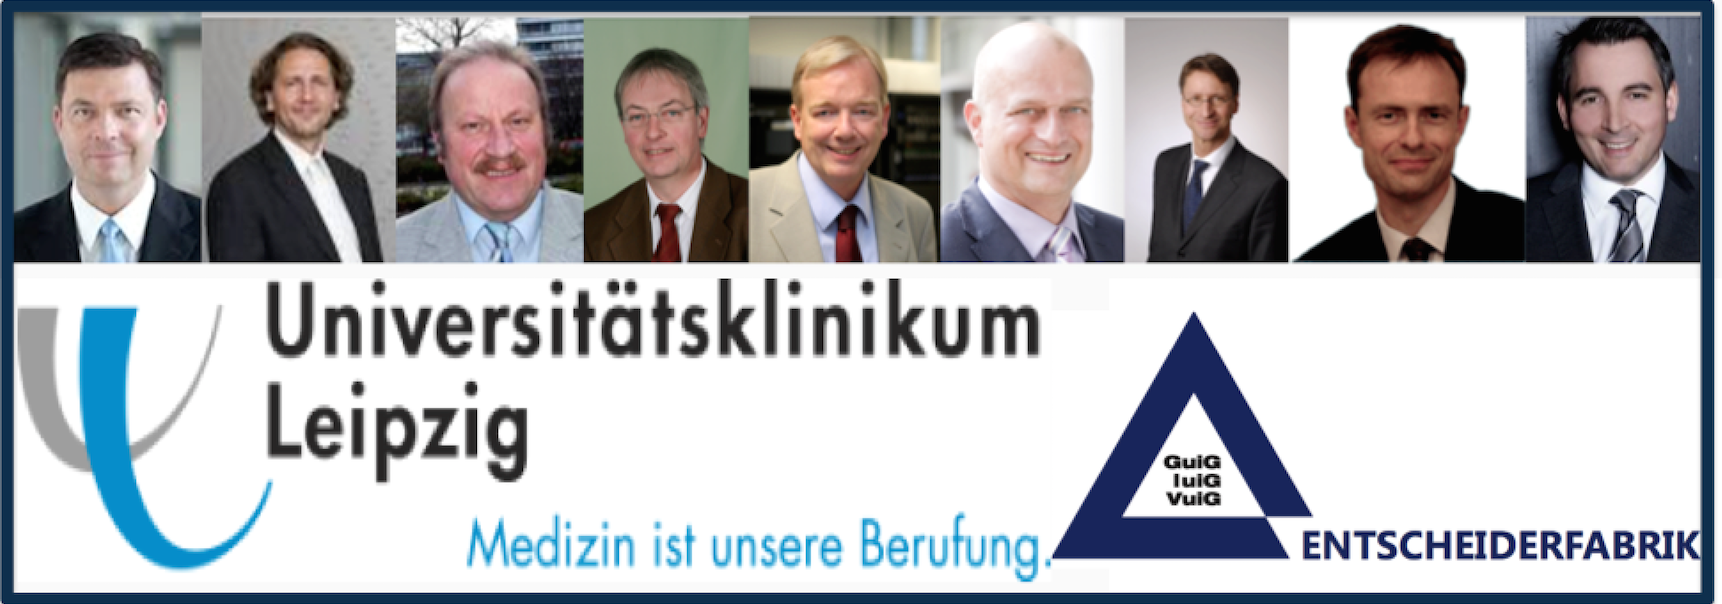 Fachgruppen-Tagung UK Leipzig